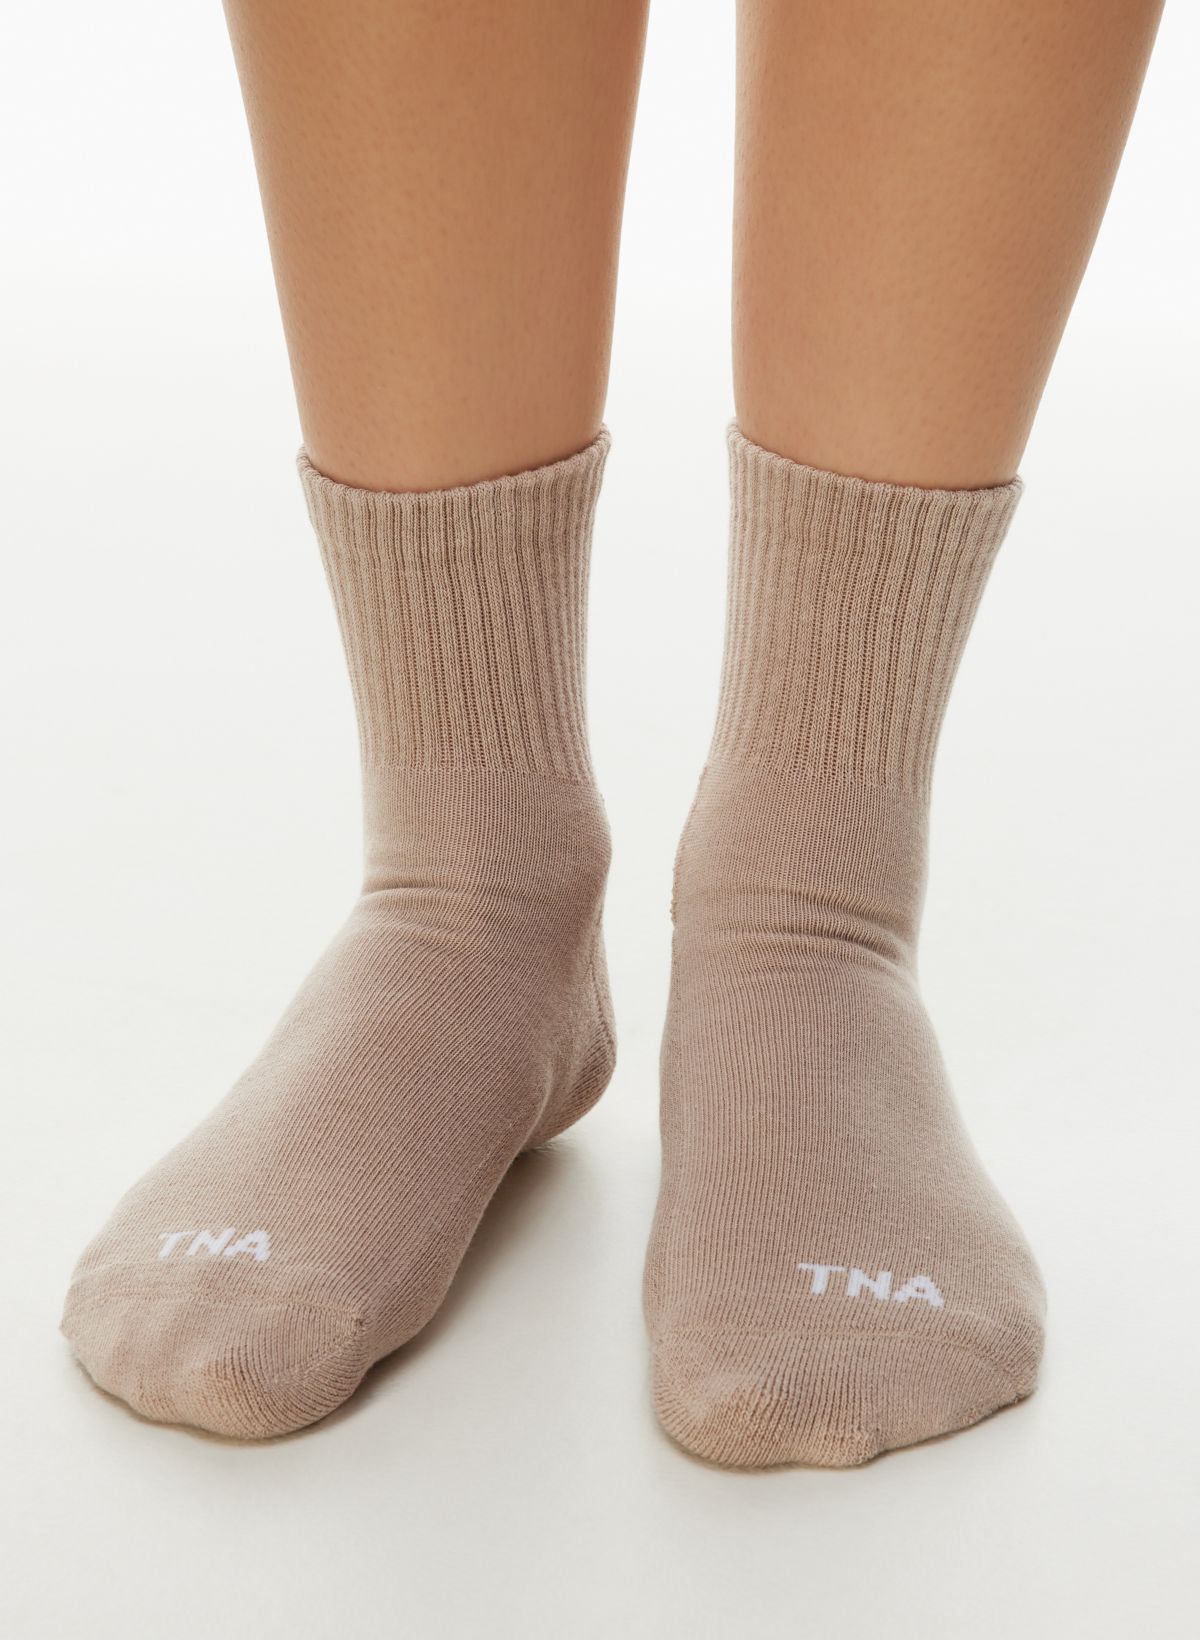 Gold Toe Over the Calf Socks Extended Size 3pk